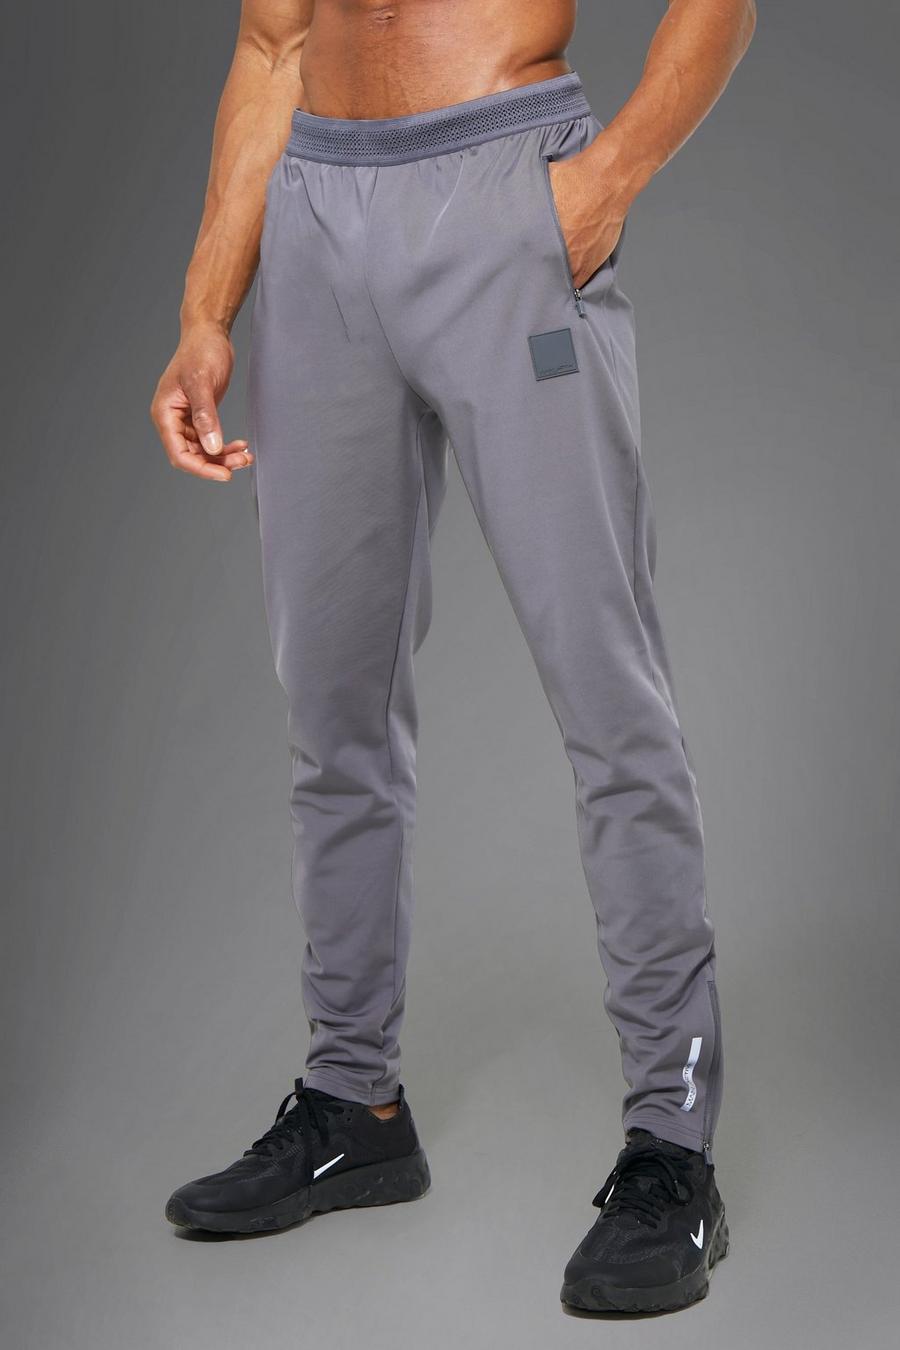 Pantaloni tuta Man Active per alta performance, Charcoal